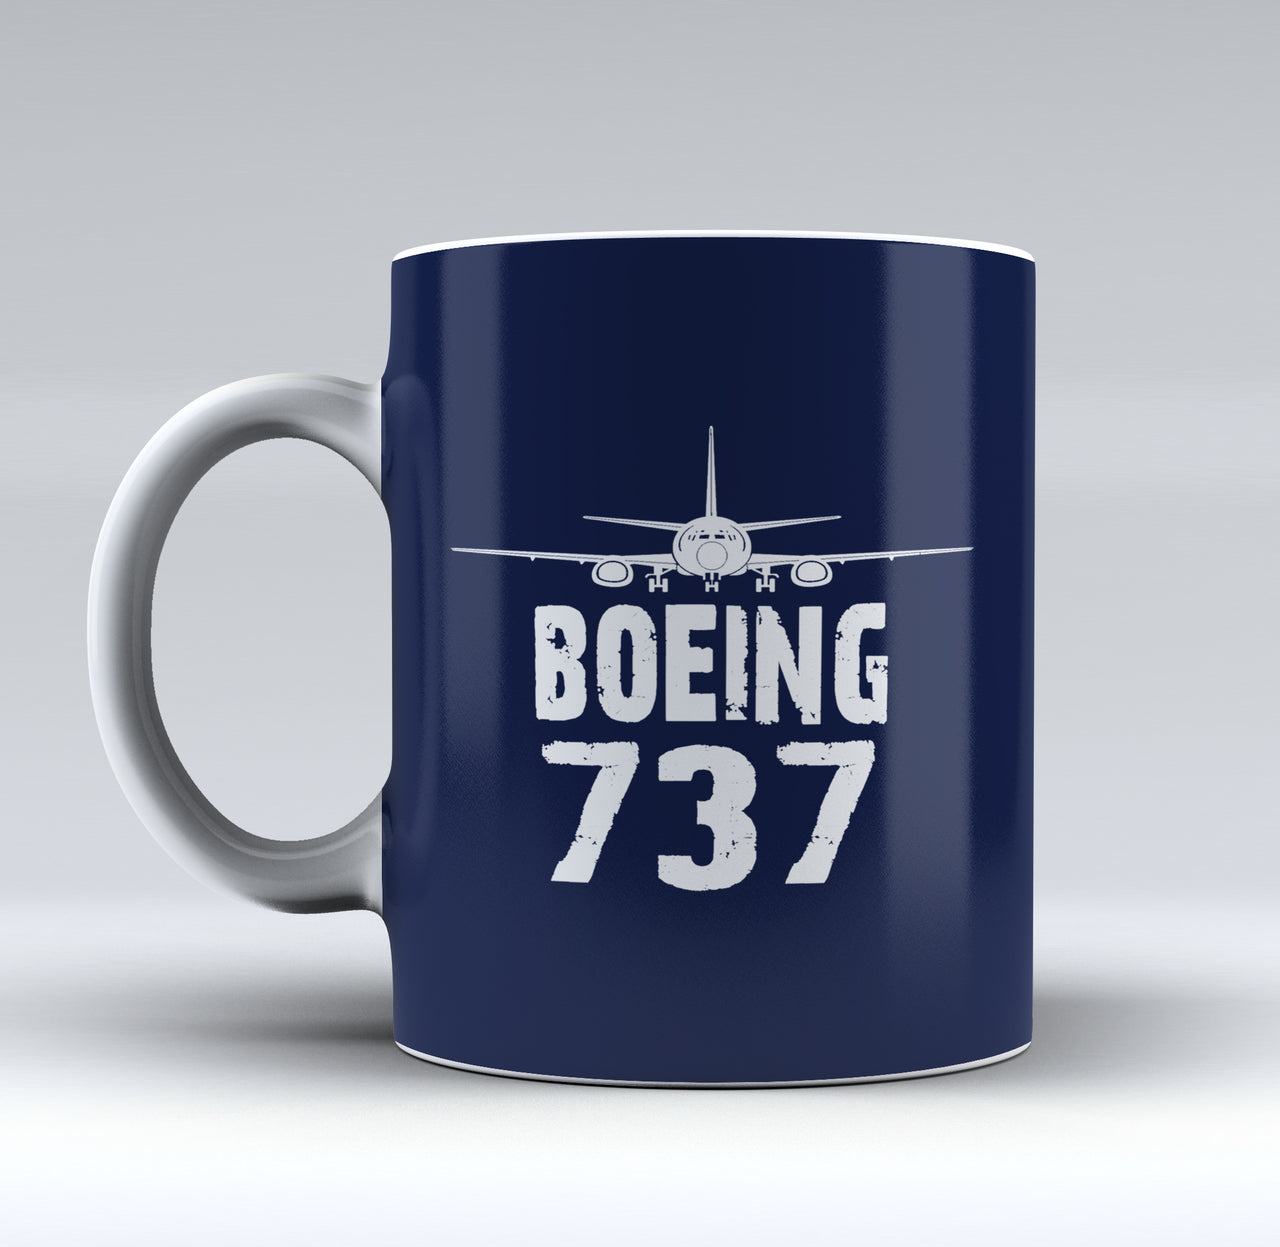 Boeing 737 & Plane Designed Mugs